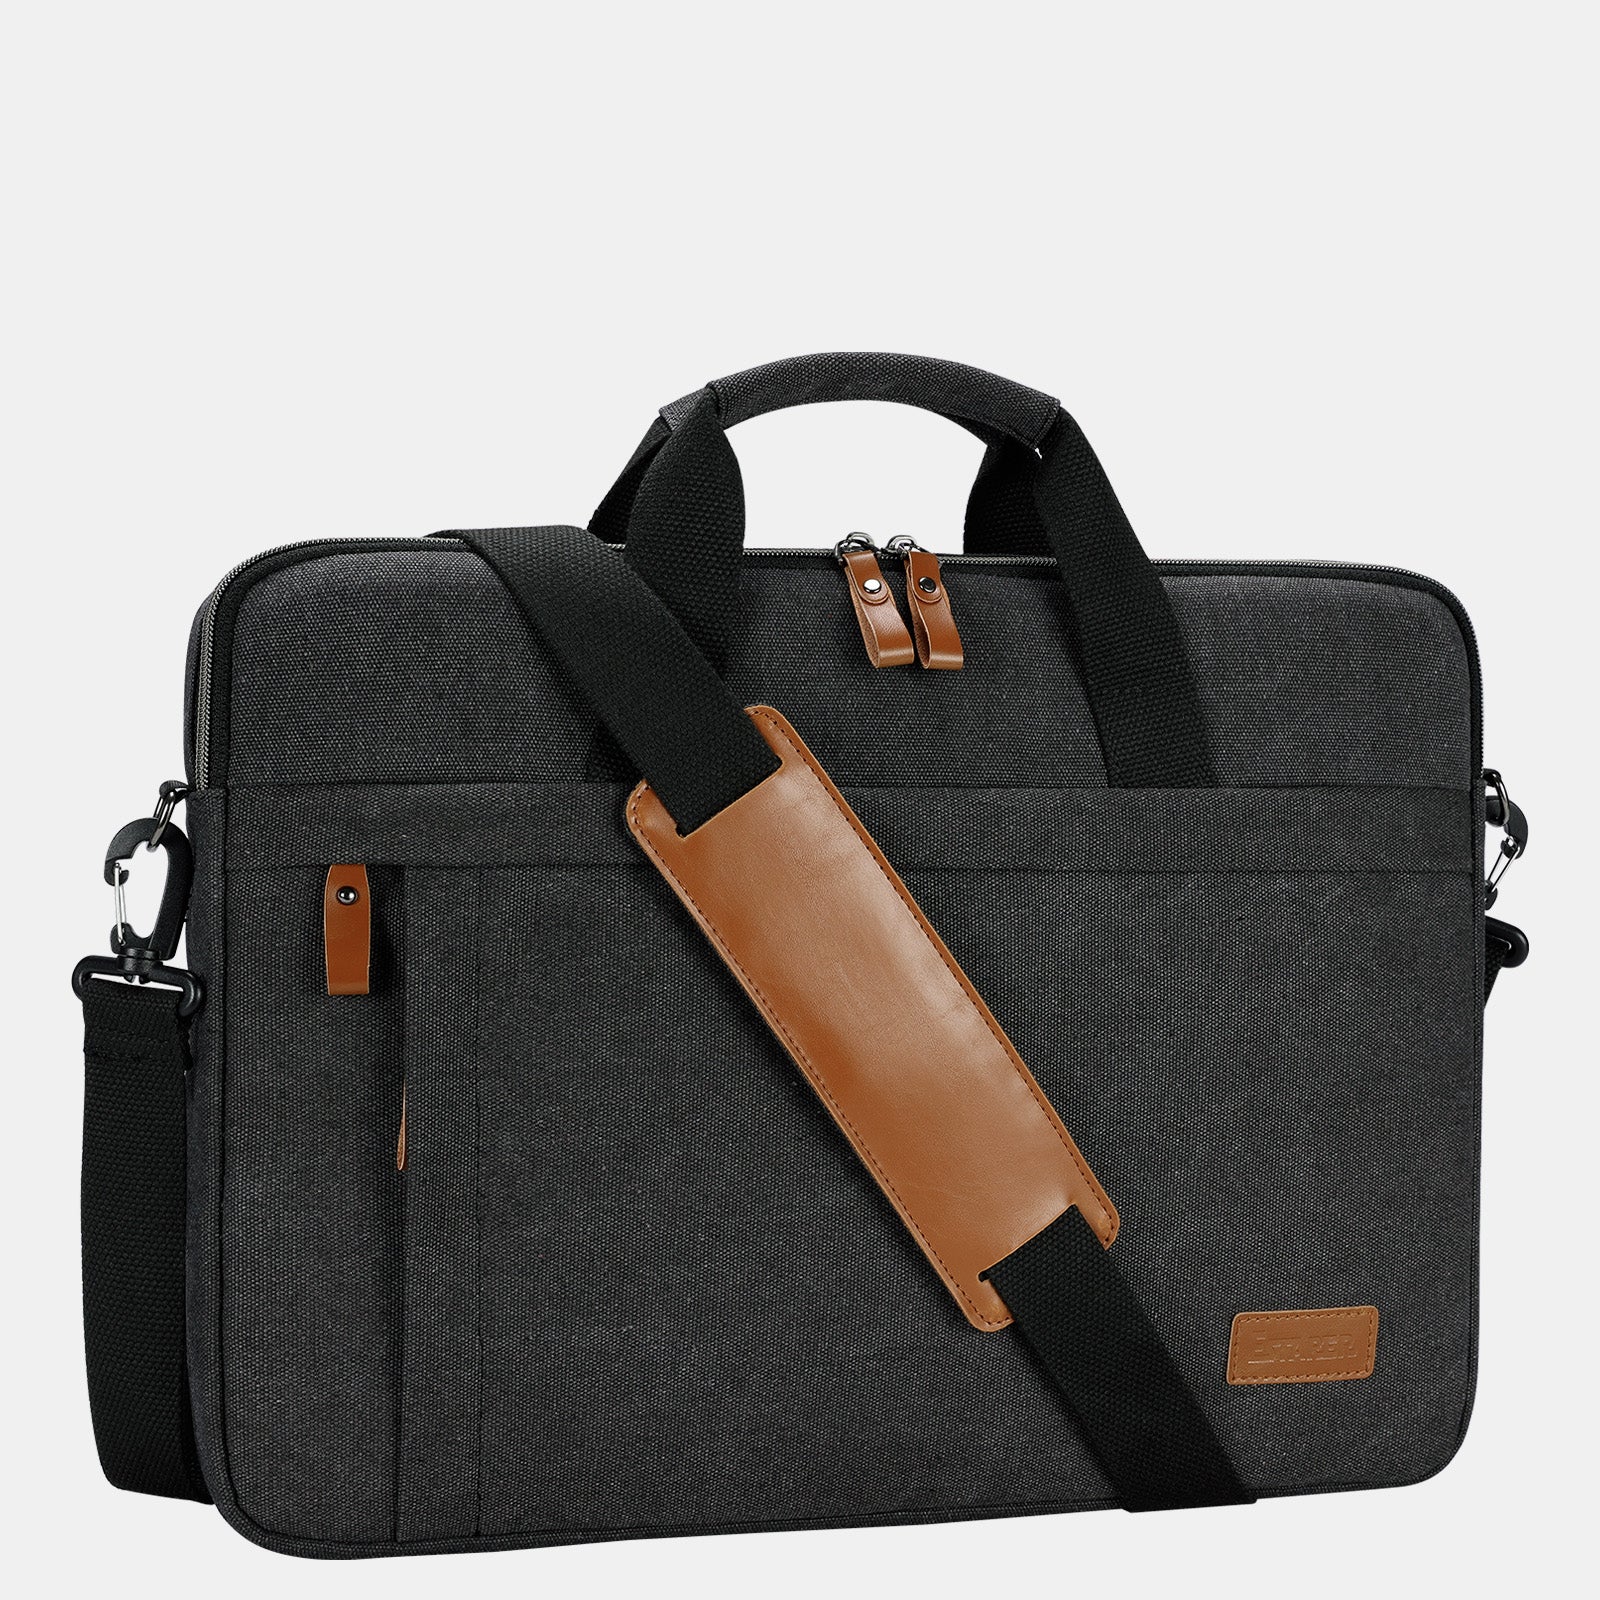 Estarer Lightweight Briefcase Laptop Bag